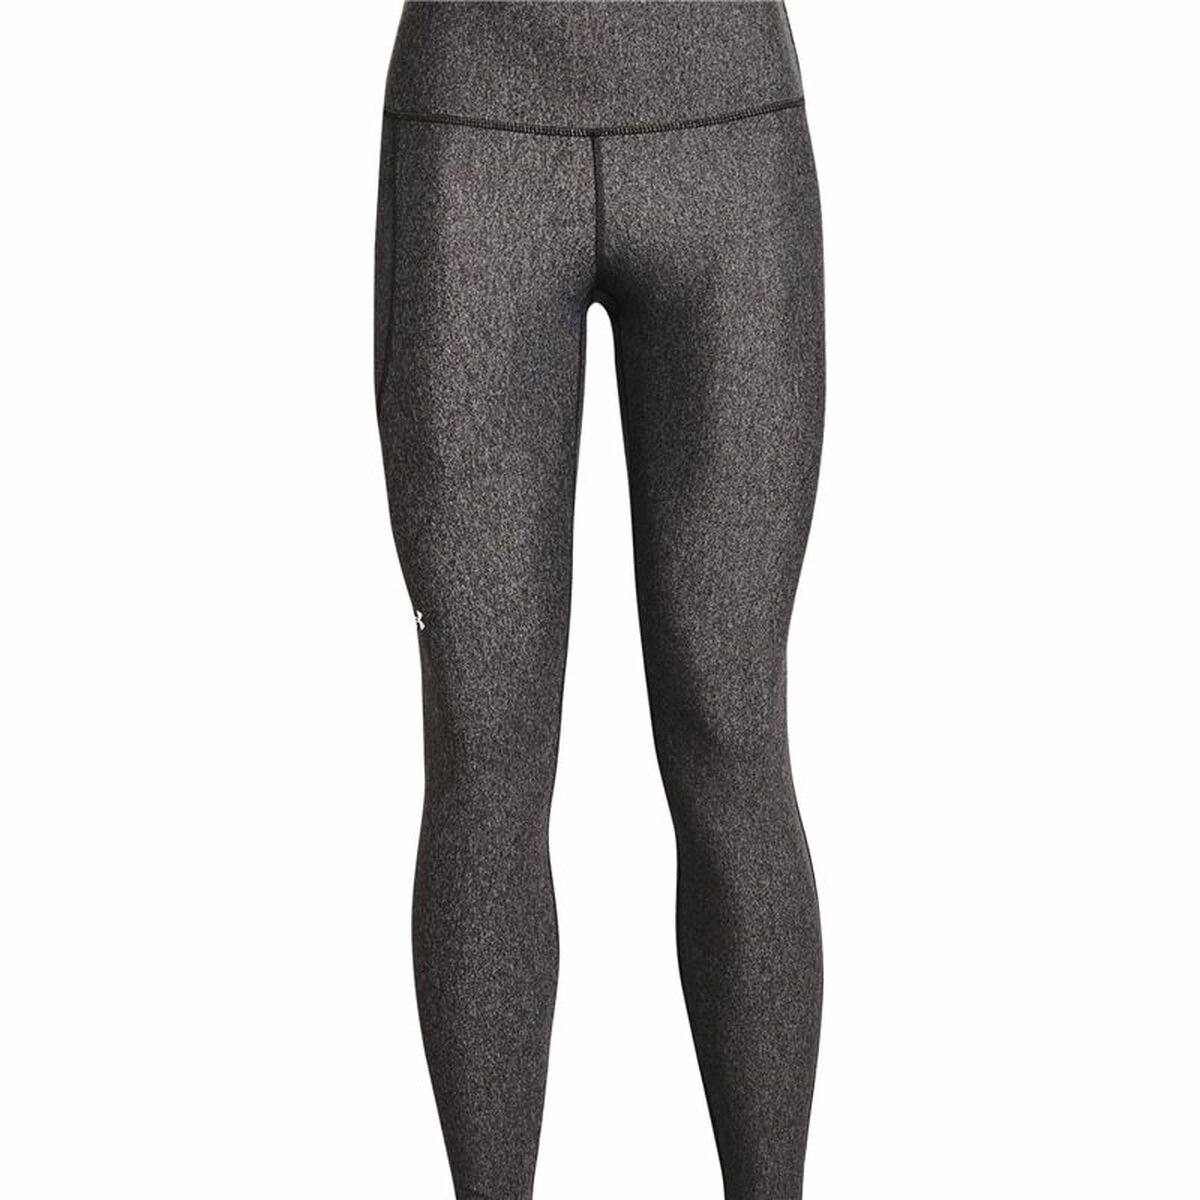 Women's sports leggings Under Armor Dark gray - buy, price